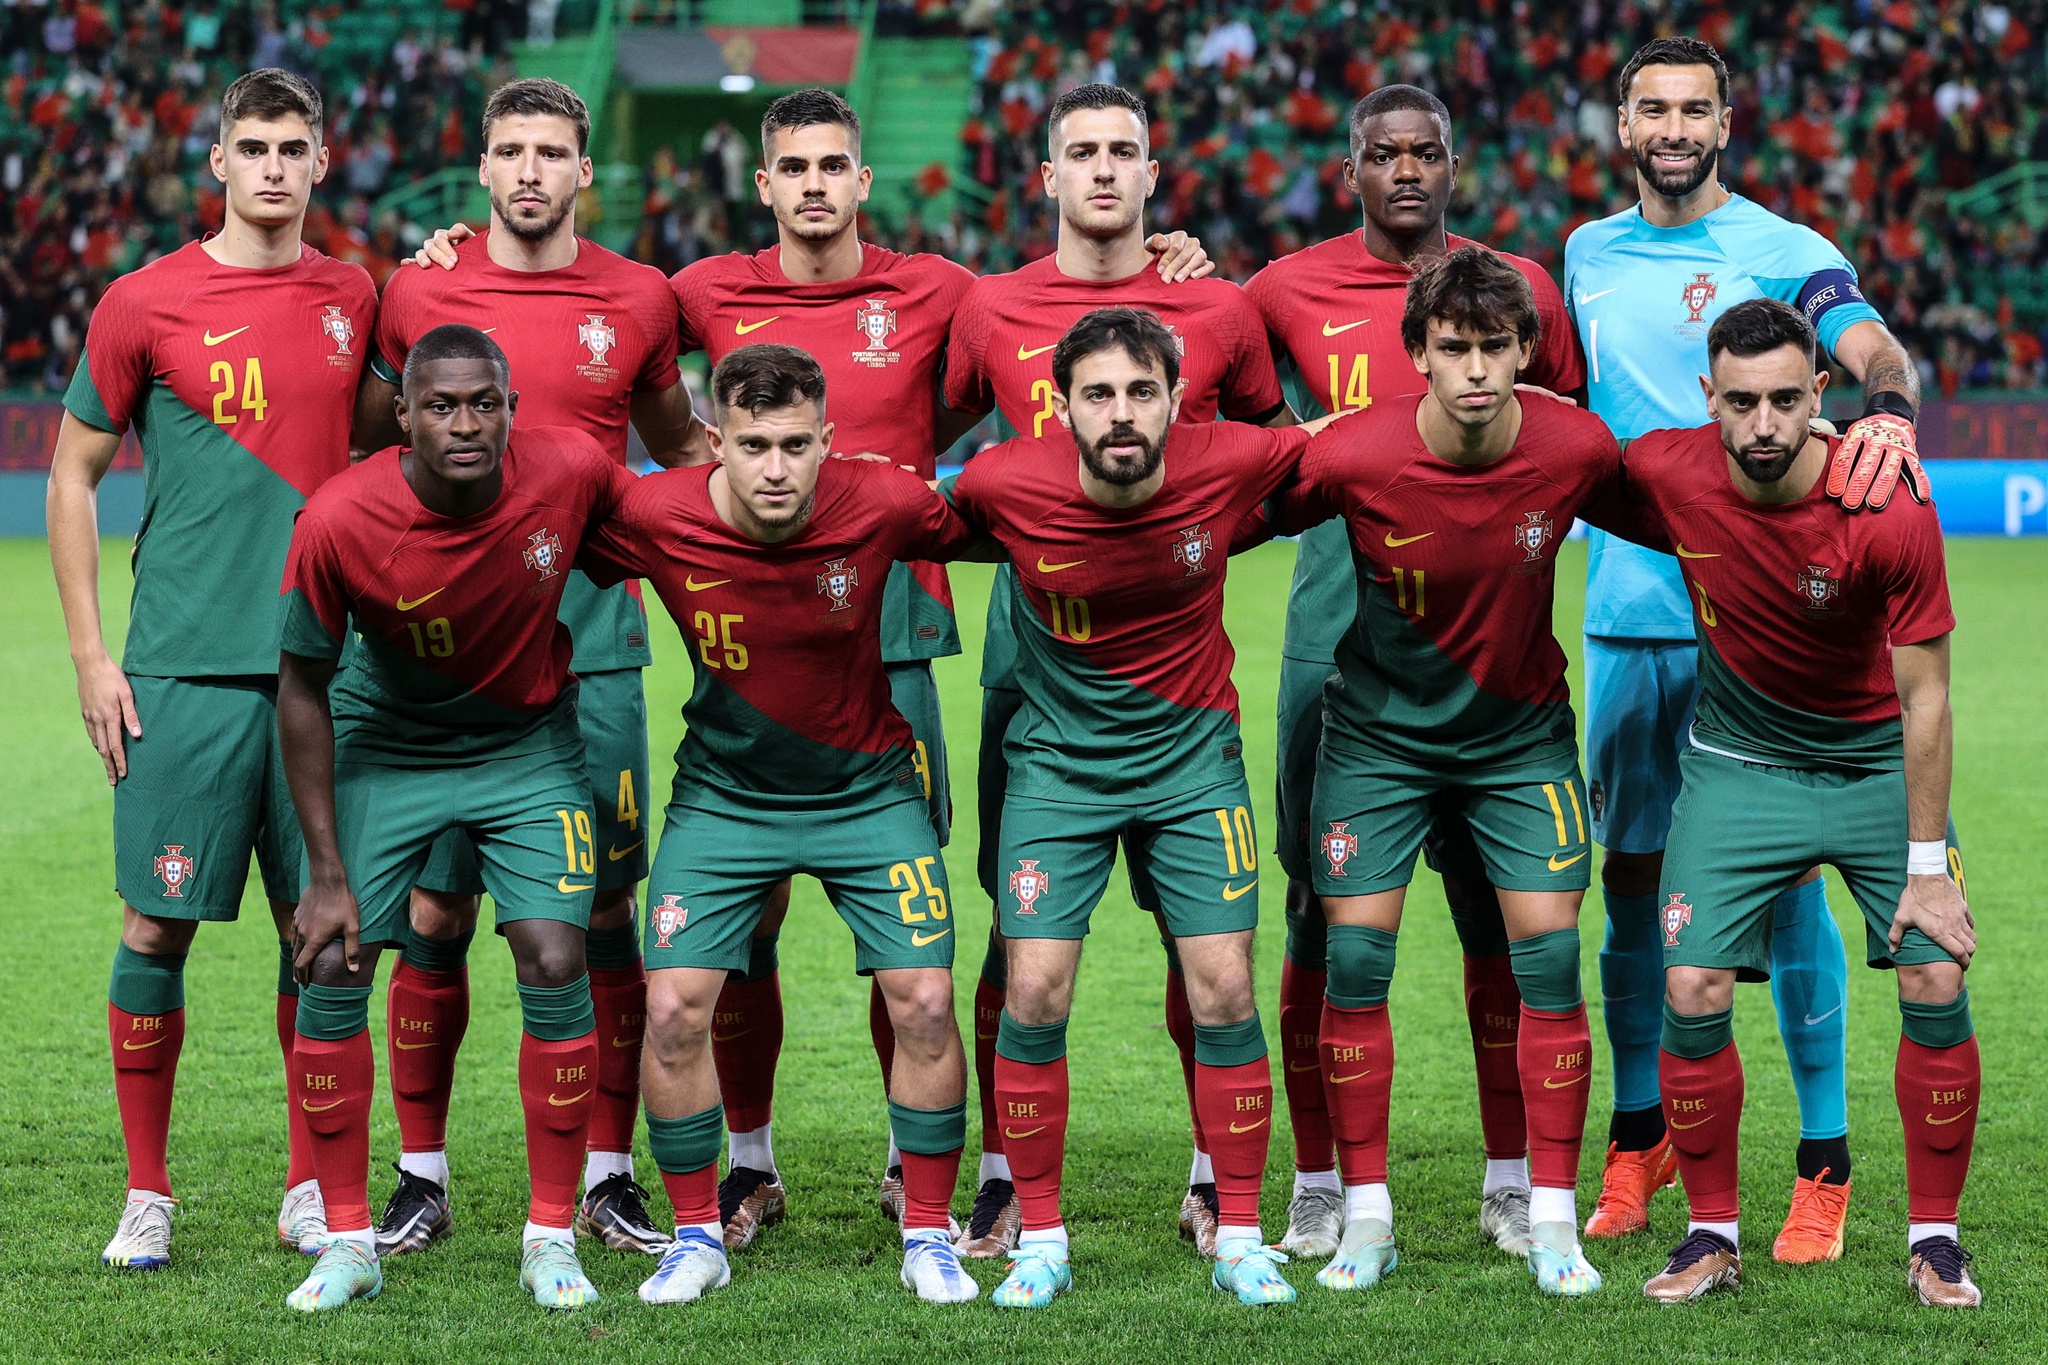 Os 6 jogos que a TVI vai transmitir das equipas portuguesas na